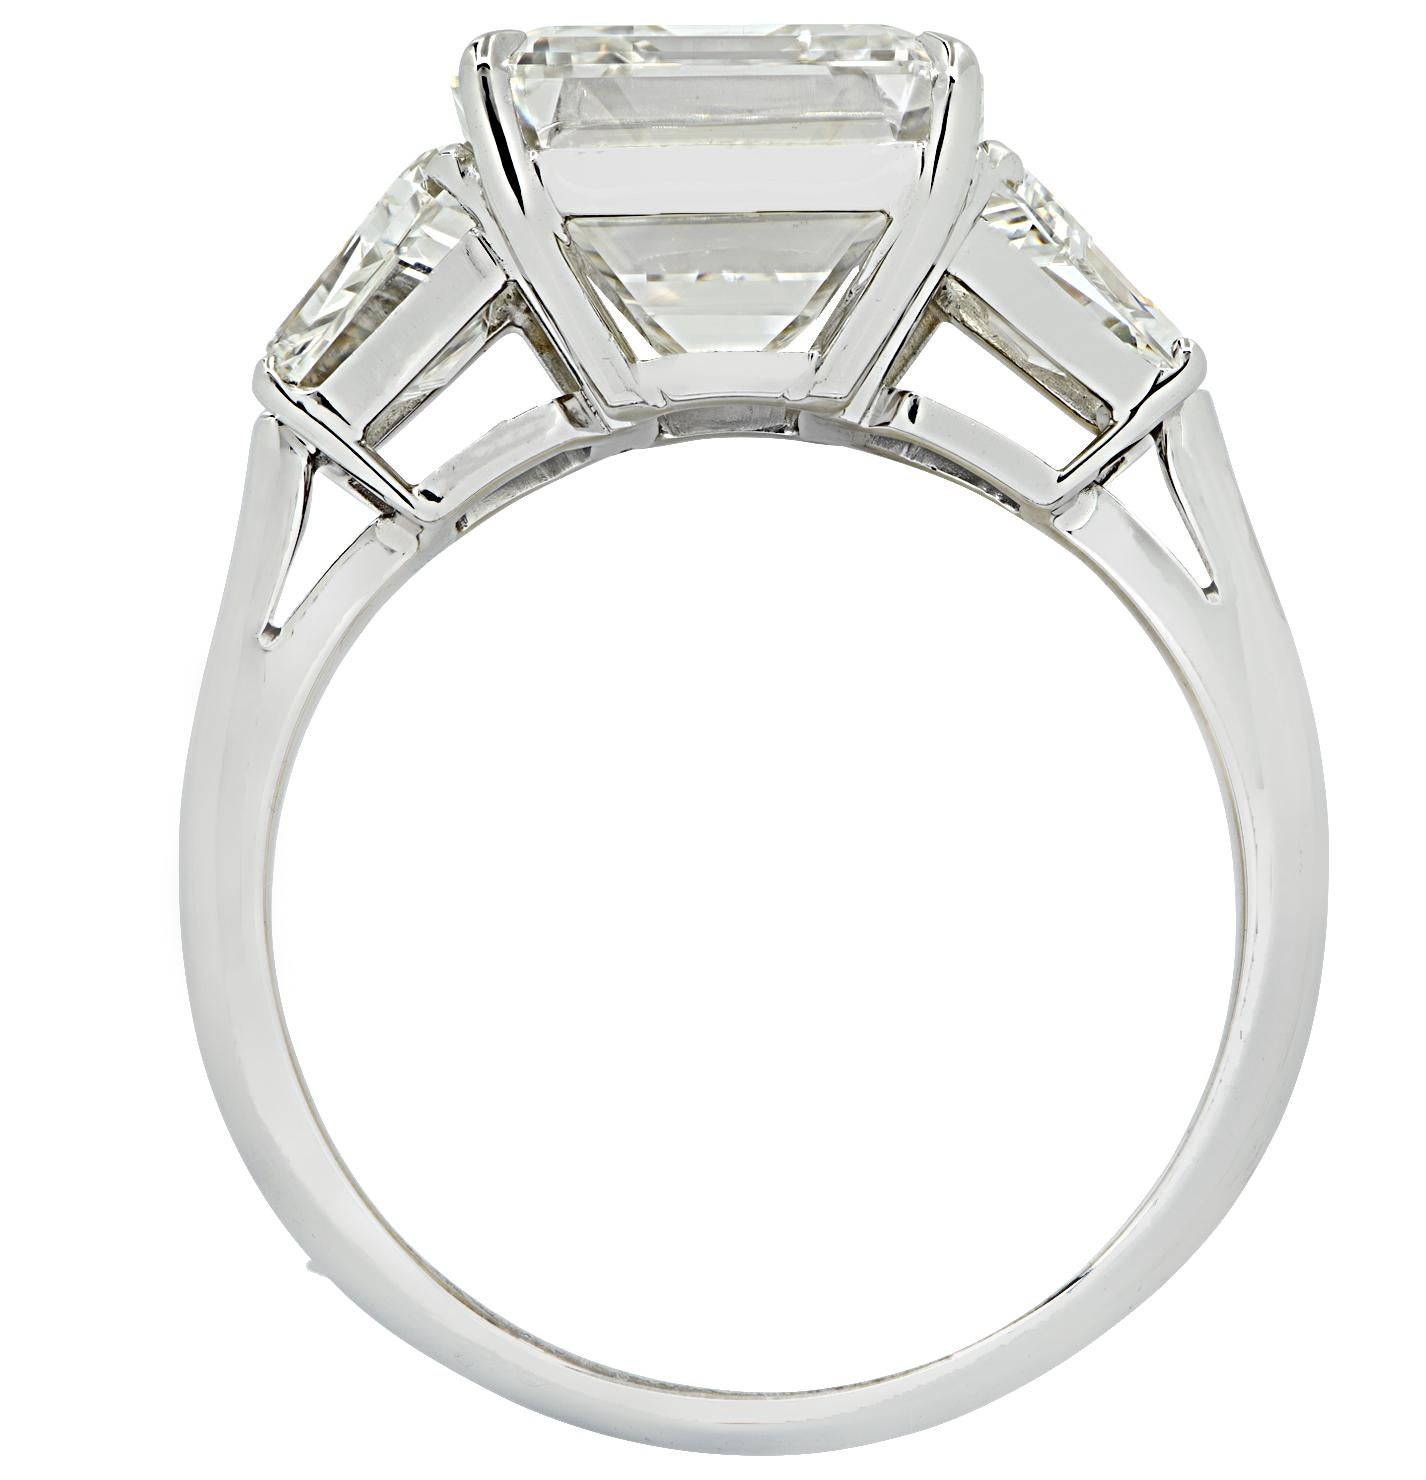 7 carat emerald cut diamond ring